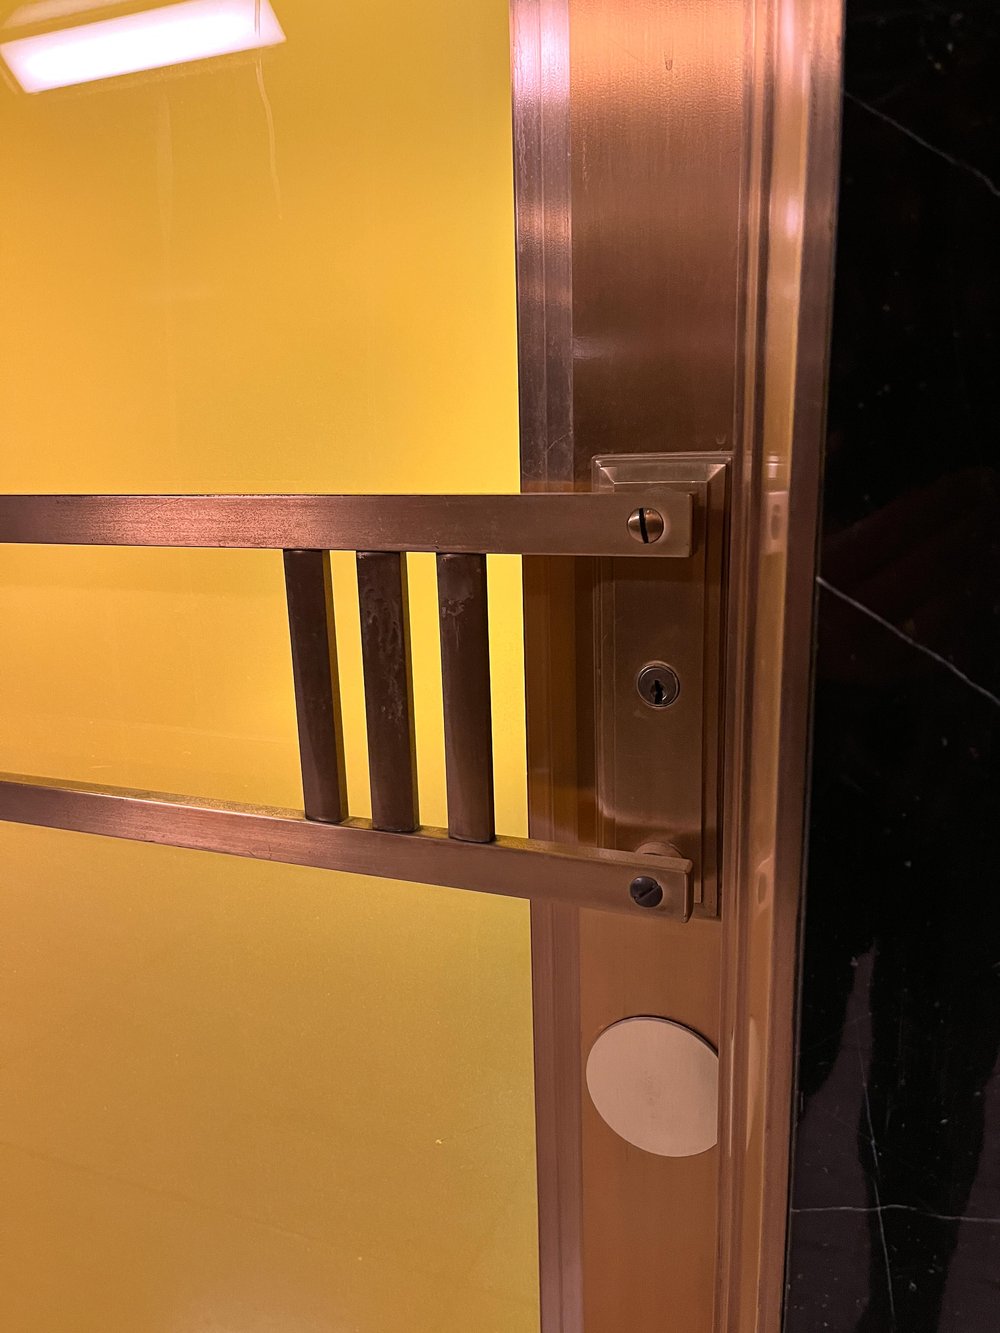 Door handle with three bars